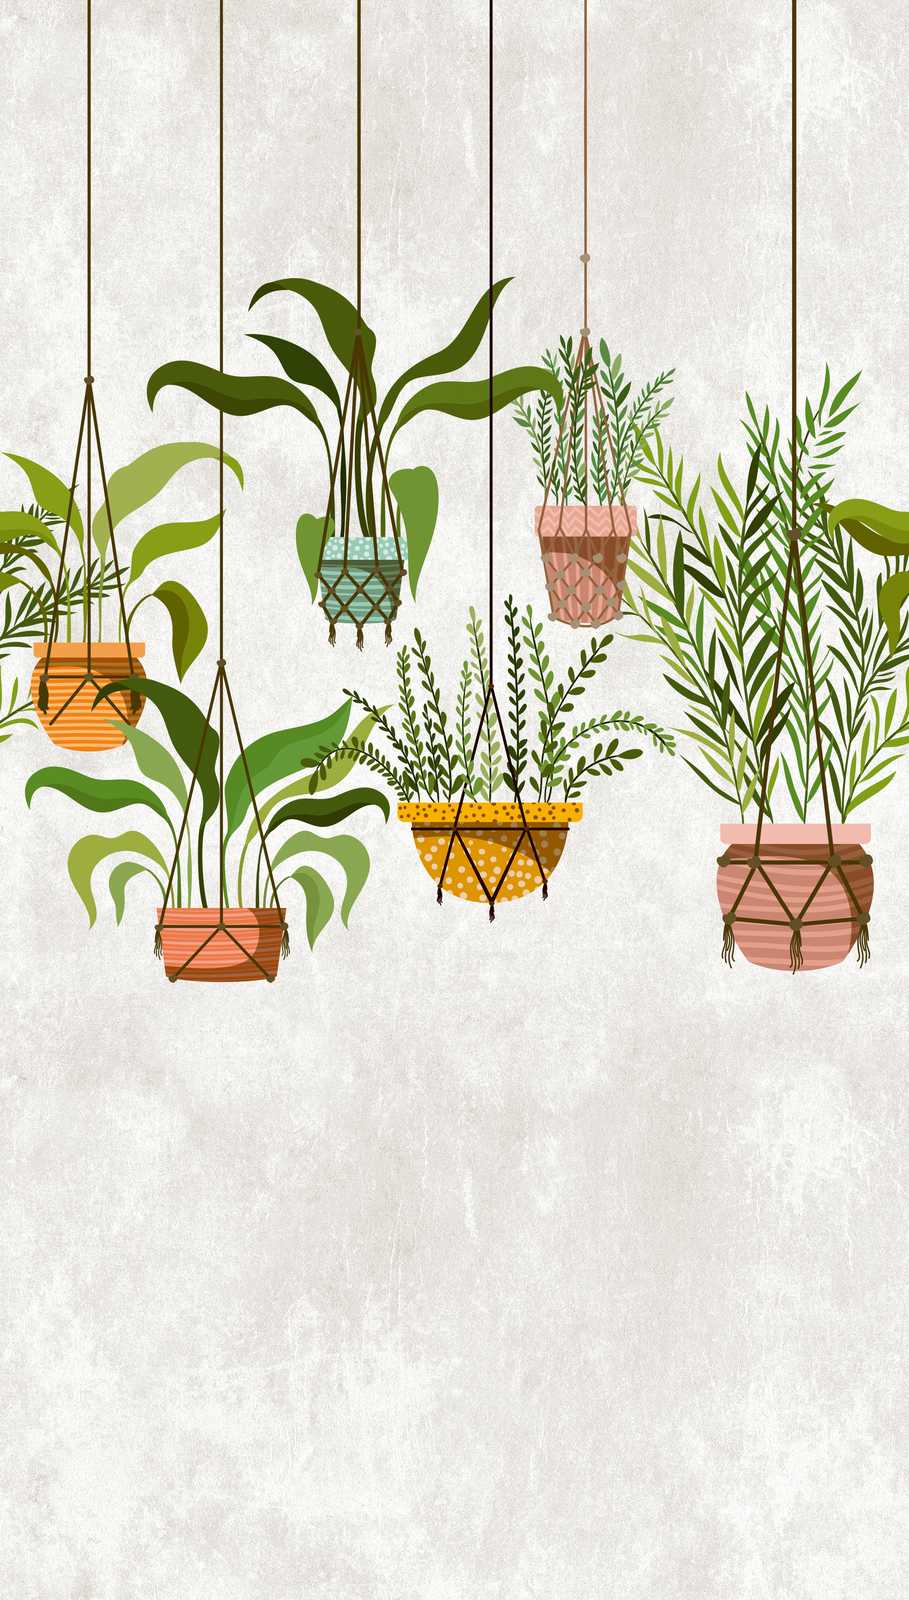             Wallpaper novelty | motif wallpaper hanging plants botanical decor
        